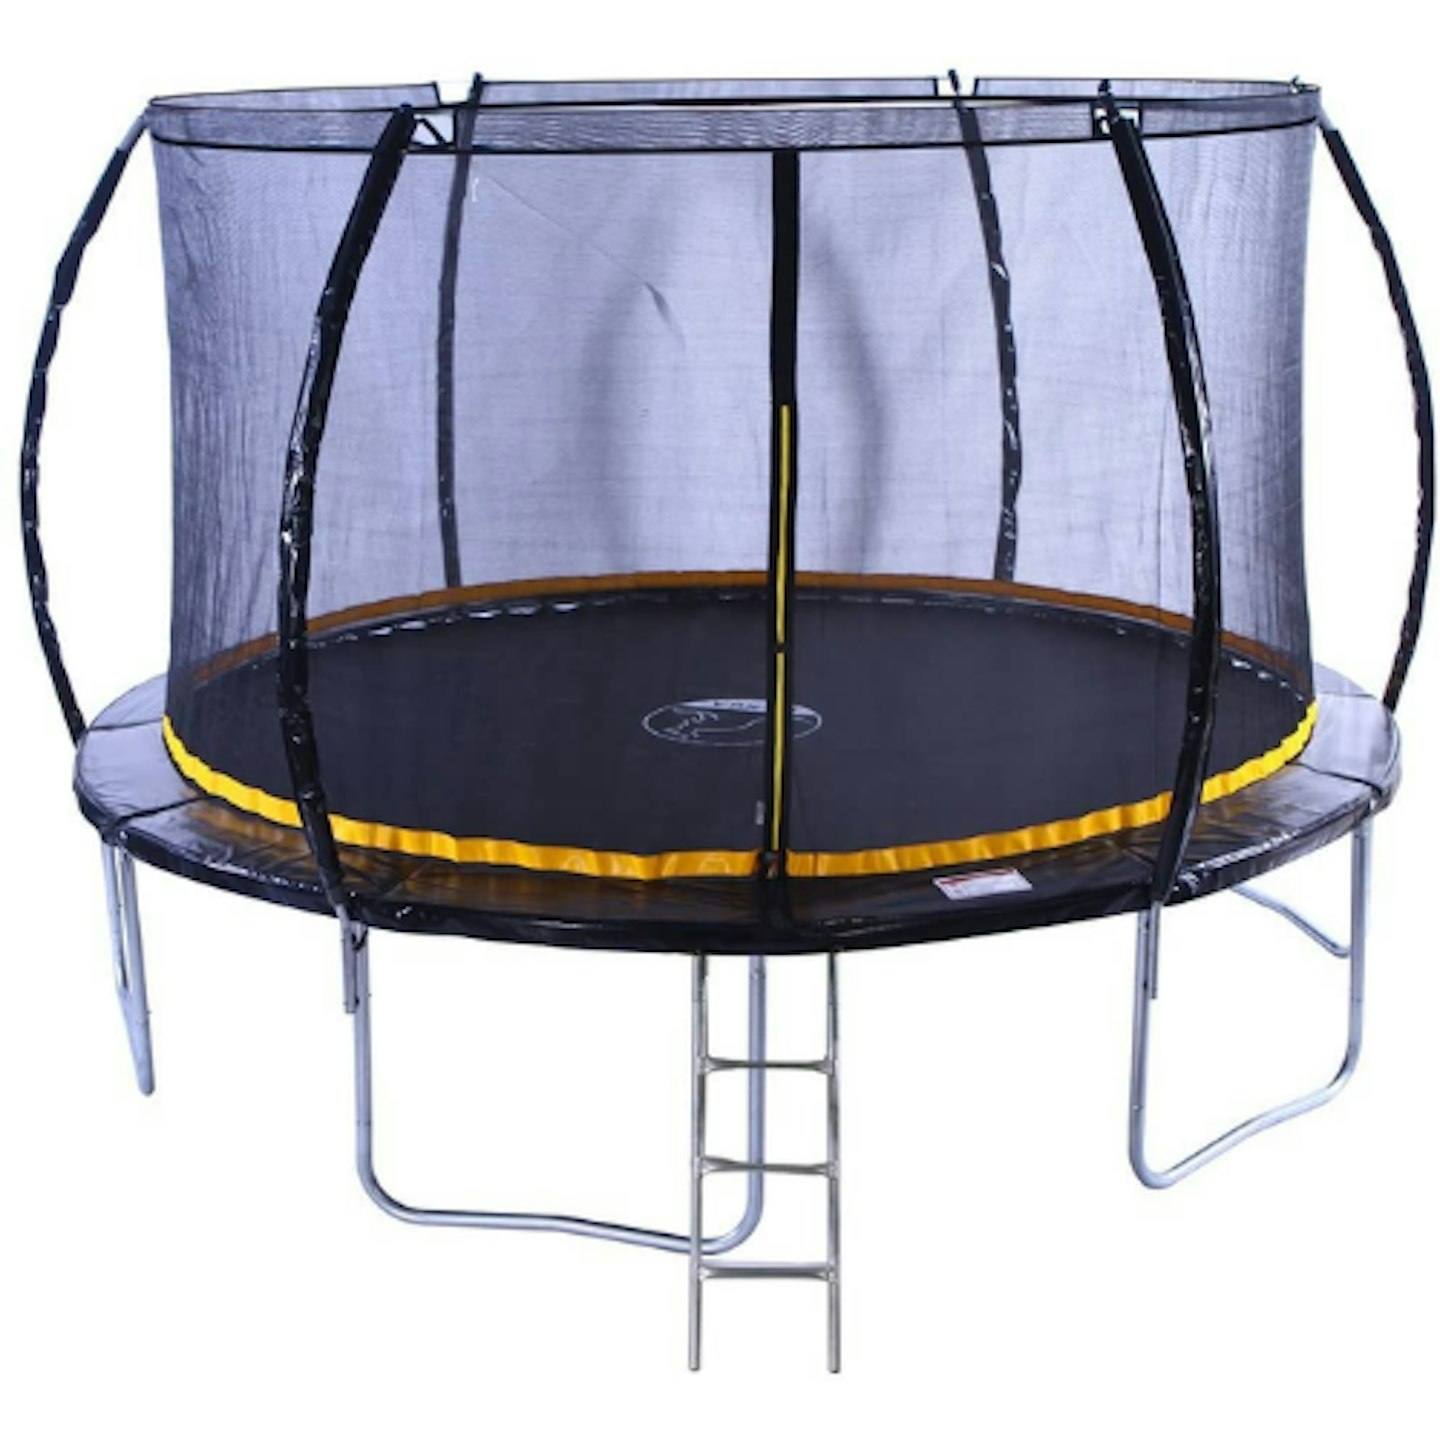 KANGA 10ft Premium Trampoline with Safety Enclosure